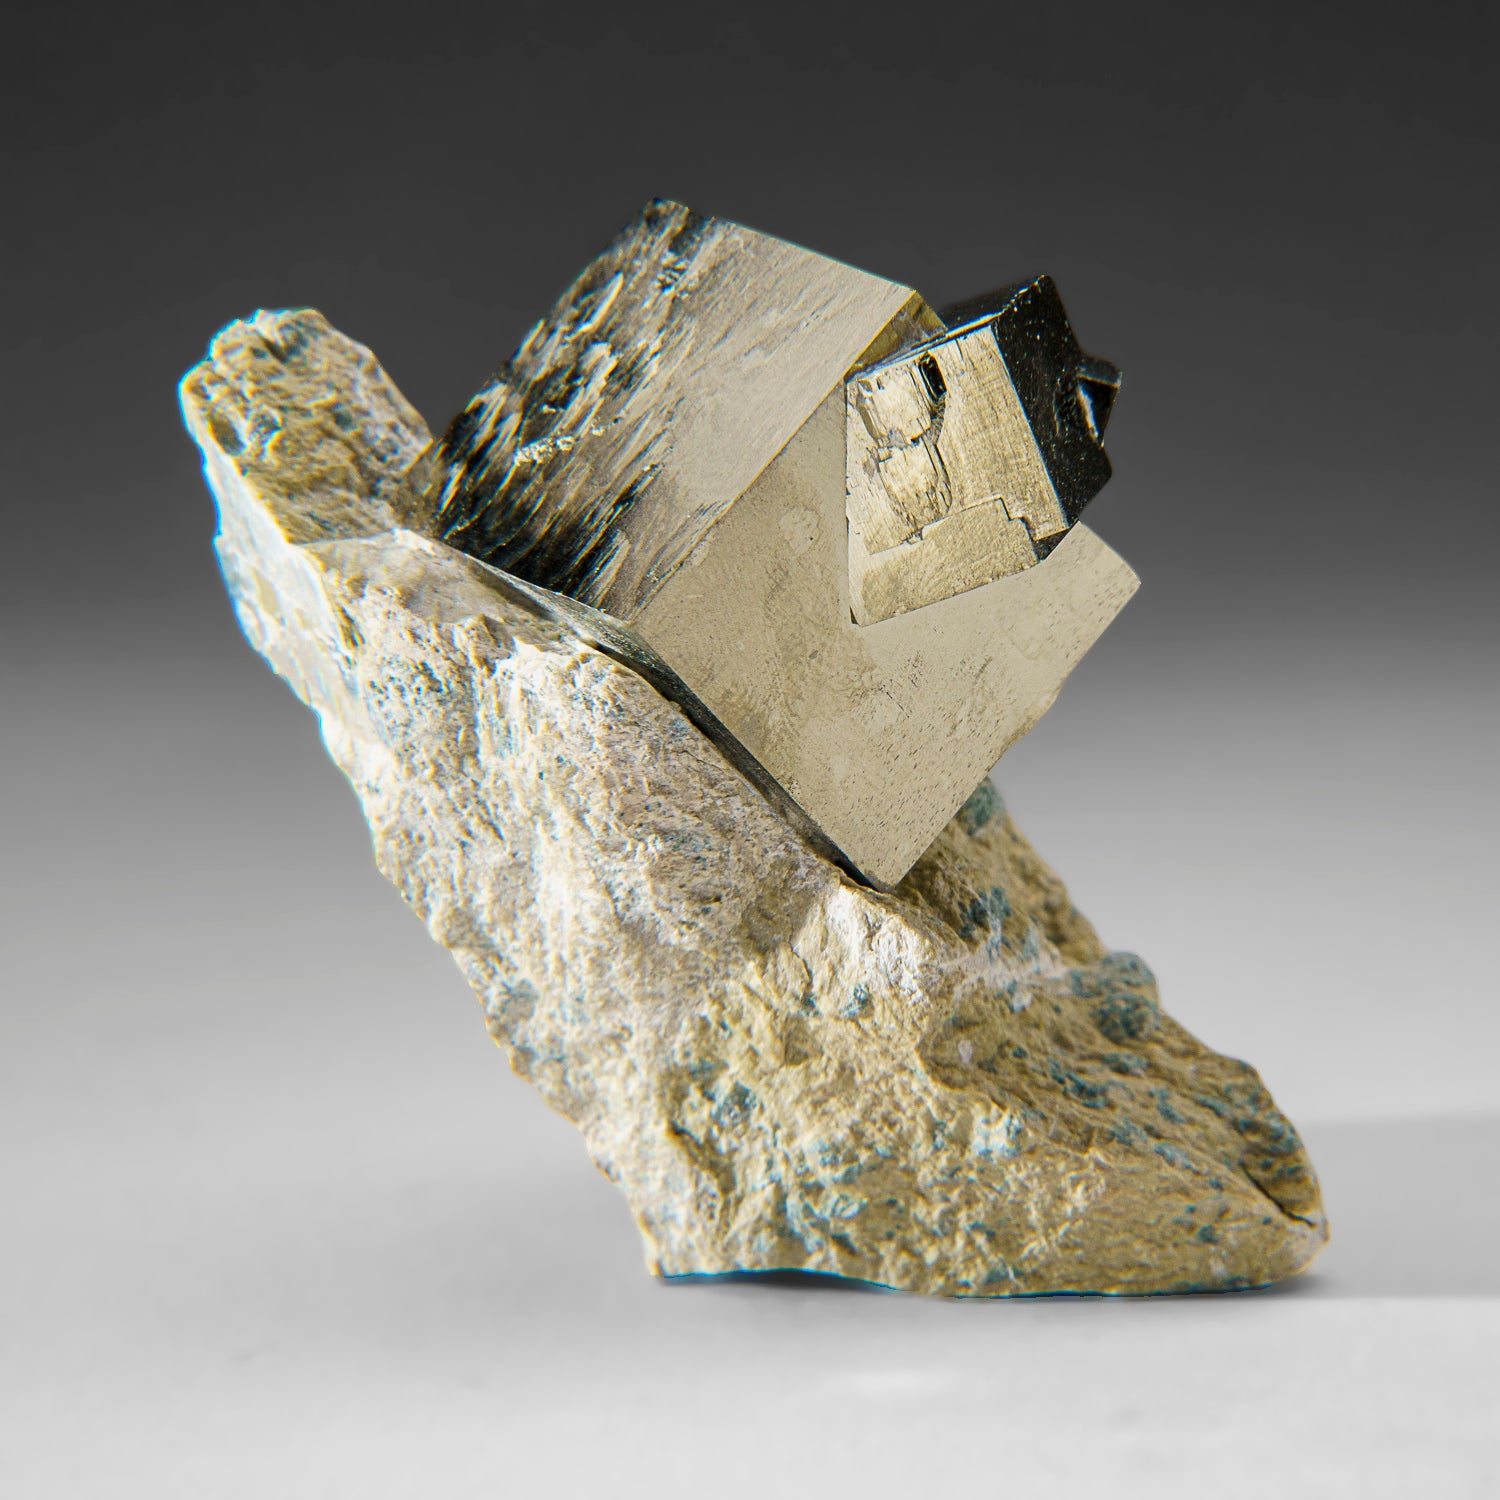 Pyrite Cube on Basalt from Navajún, La Rioja Province, Spain (208 grams)